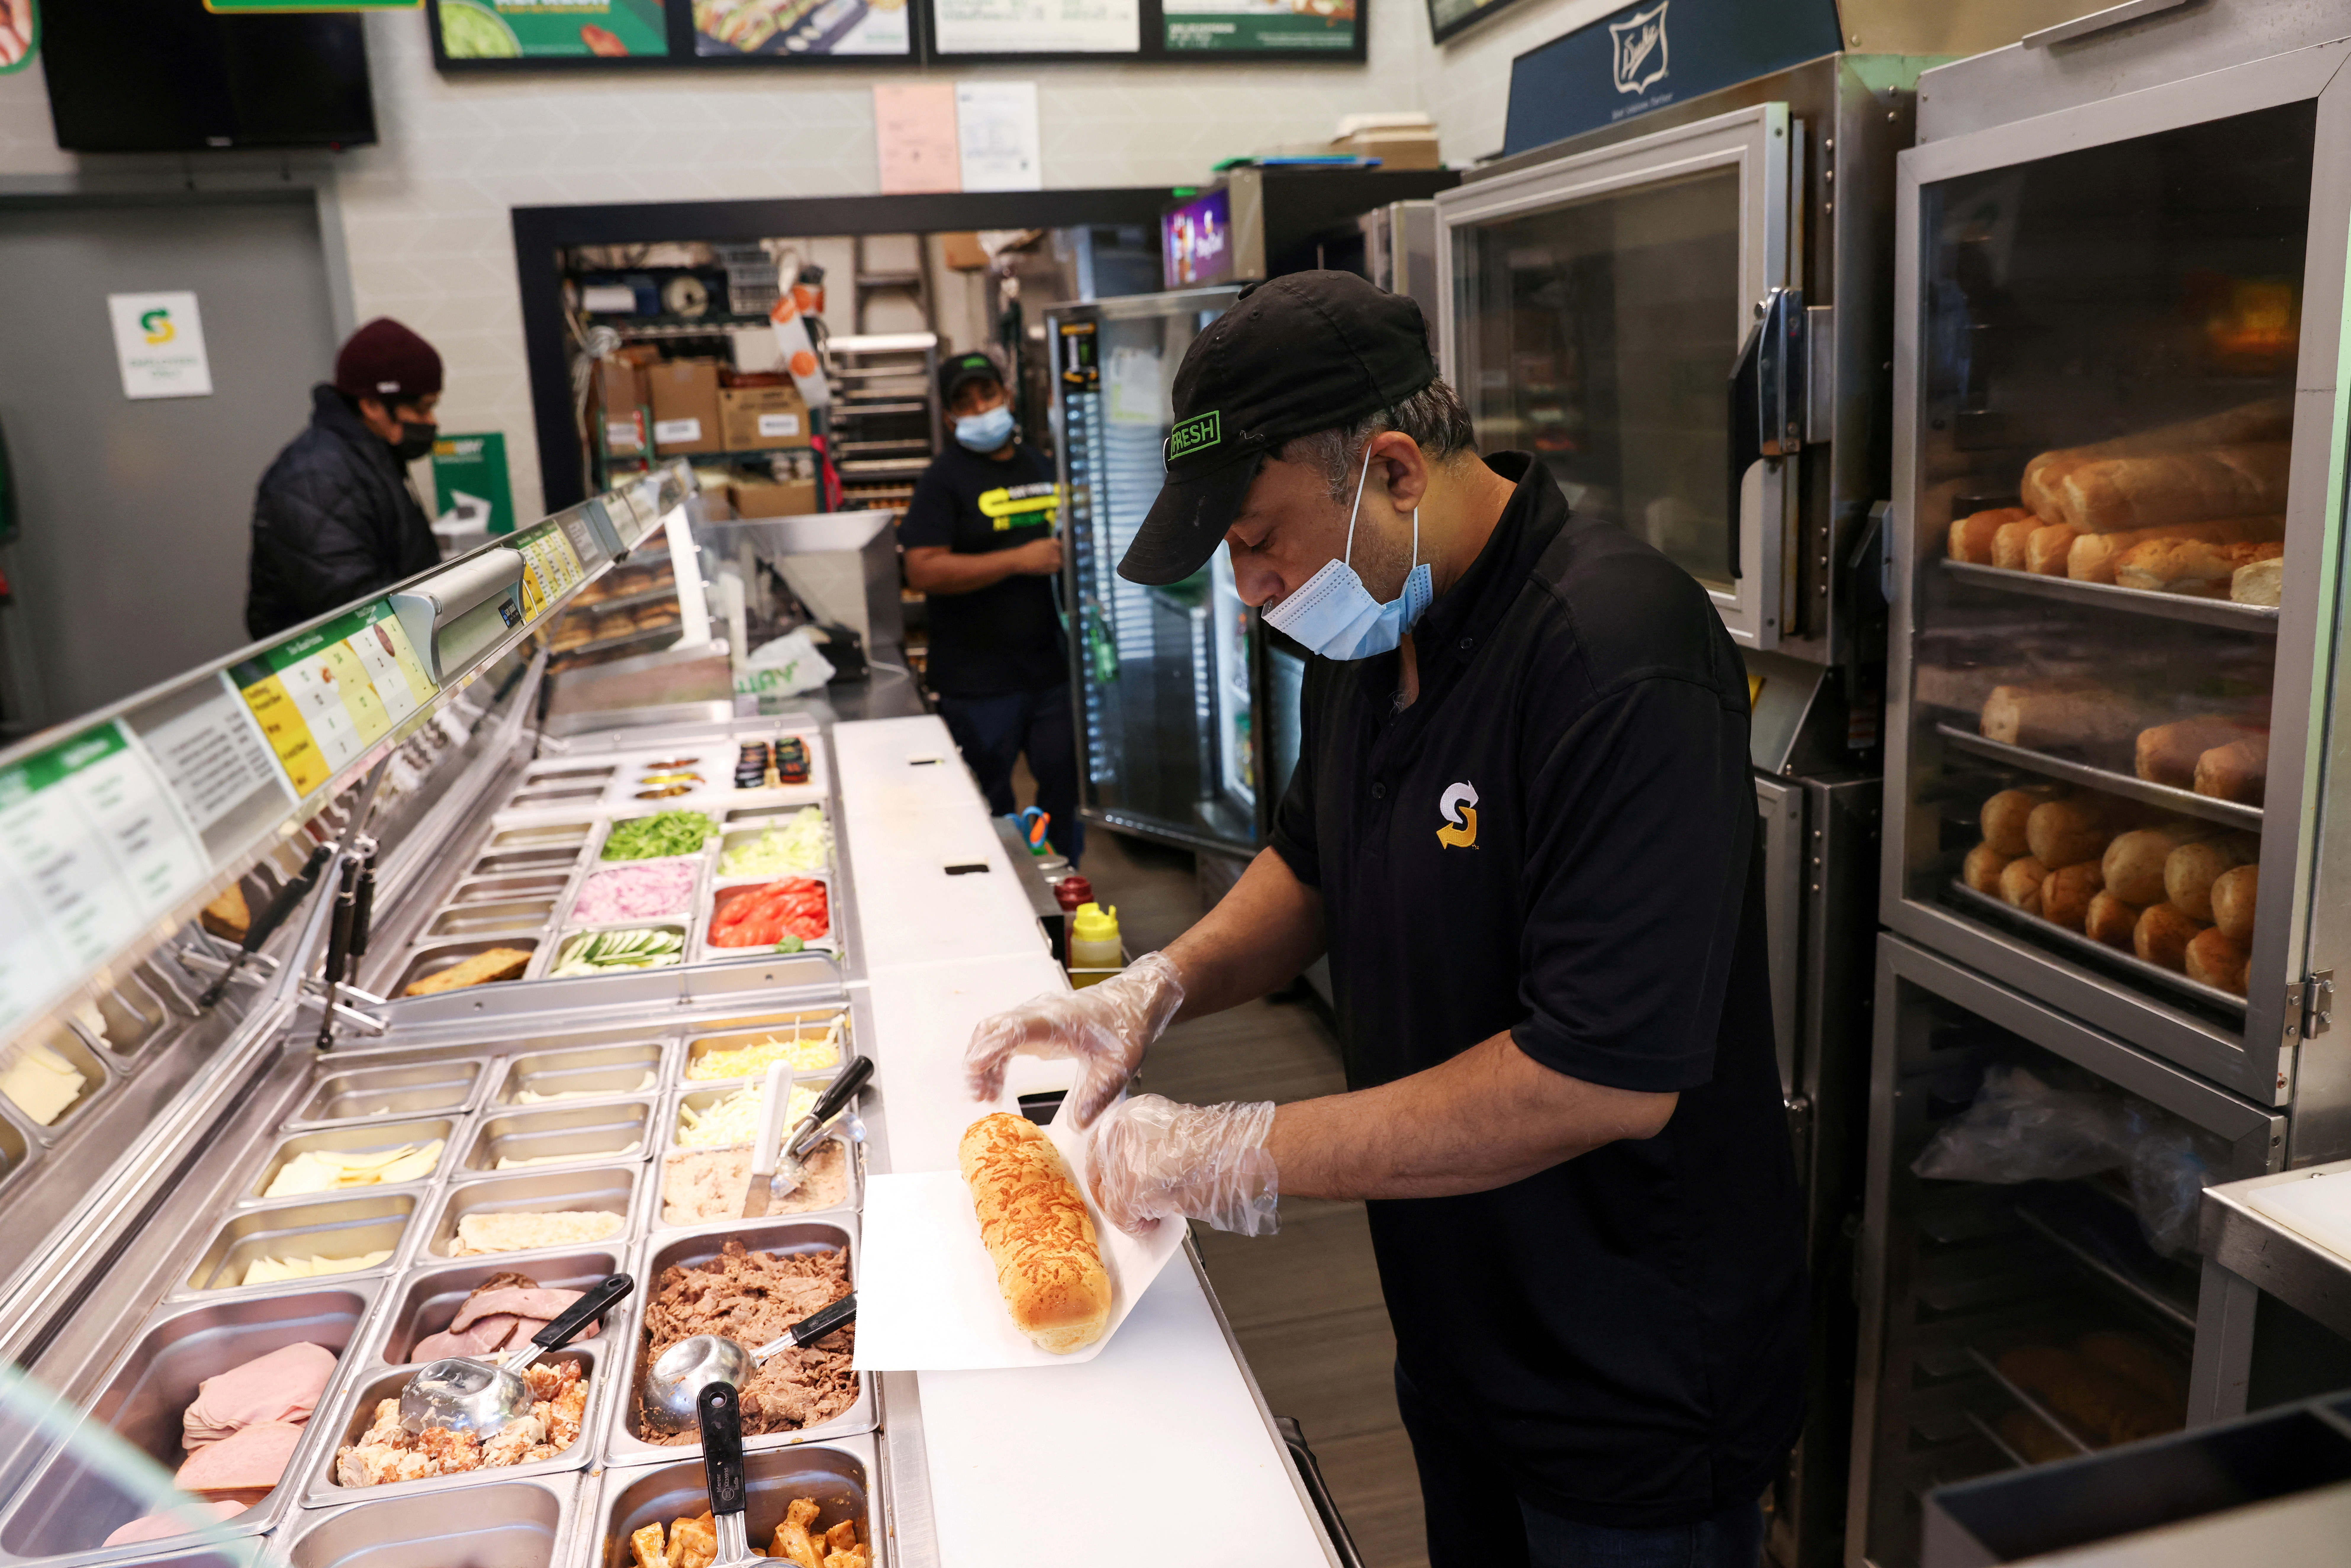 Servers work at a Subway restaurant in Manhattan, New York City